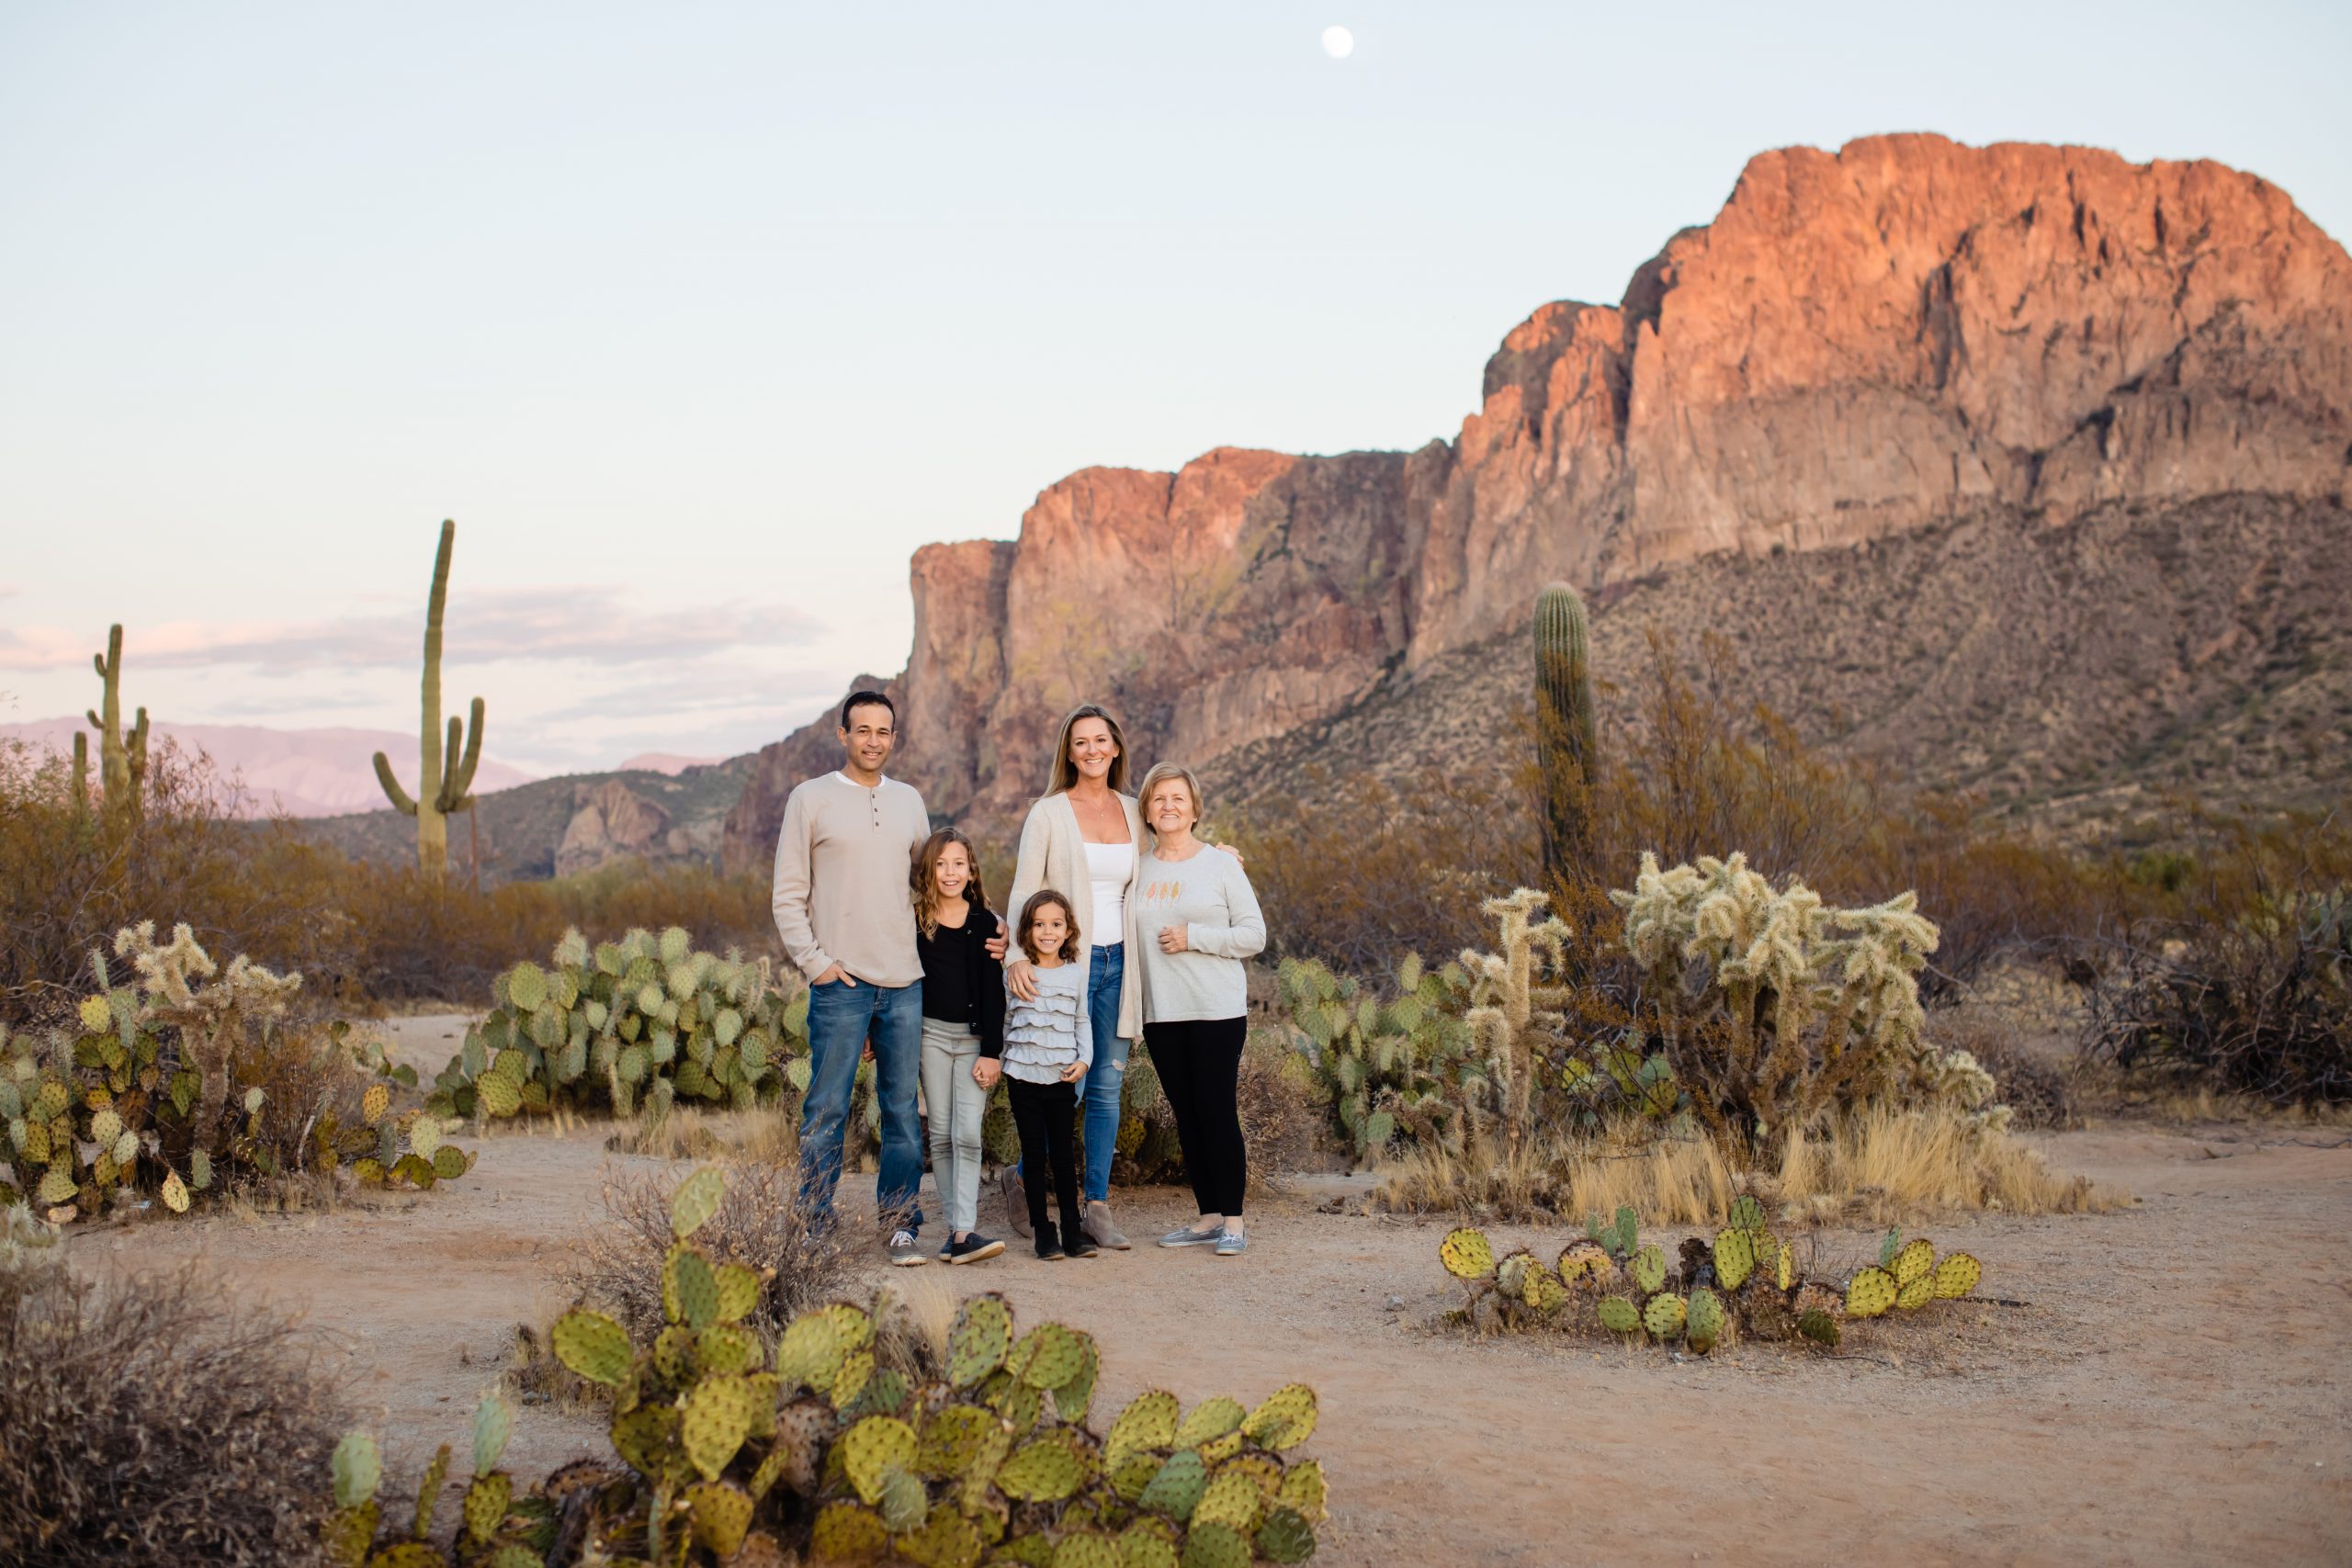 Arizona desert family photography, Salt river family photography, Arizona family photos, Arizona desert family photos